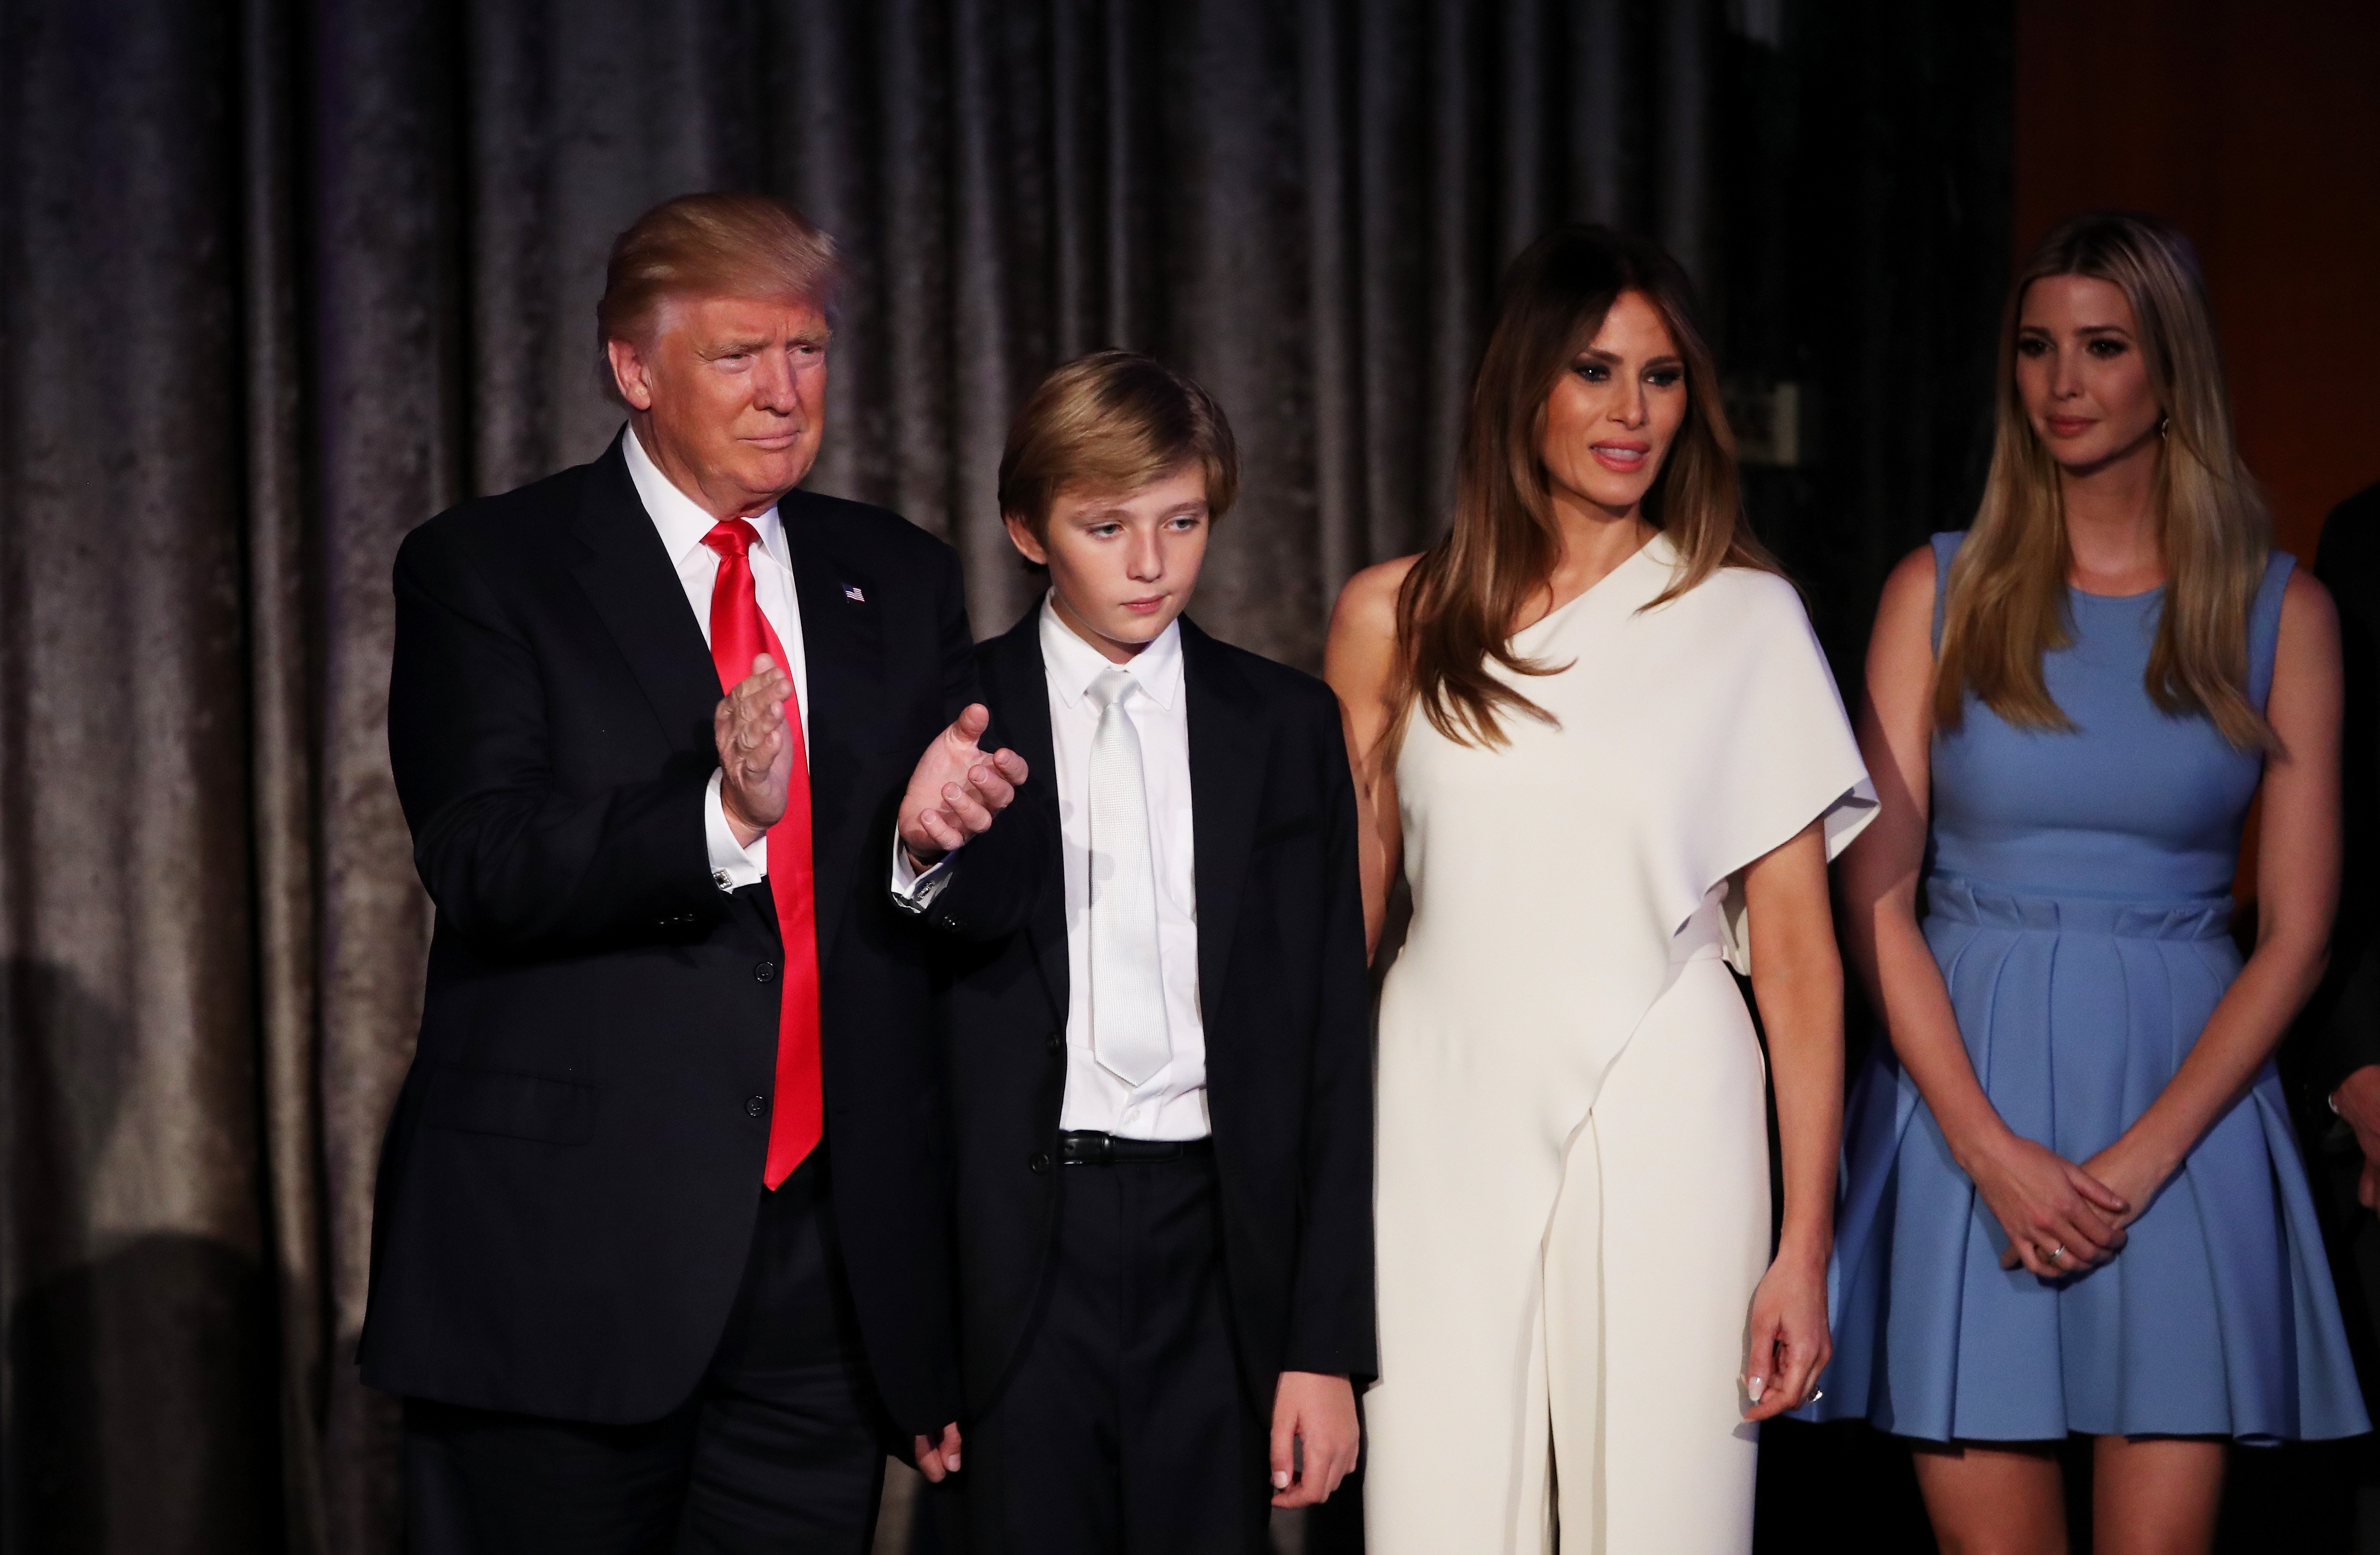 Donald Trump, Barron Trump, Melania Trump, and Ivanka Trump during election night event at the New York Hilton Midtown, November 9, 2016 | Photo: Getty Images